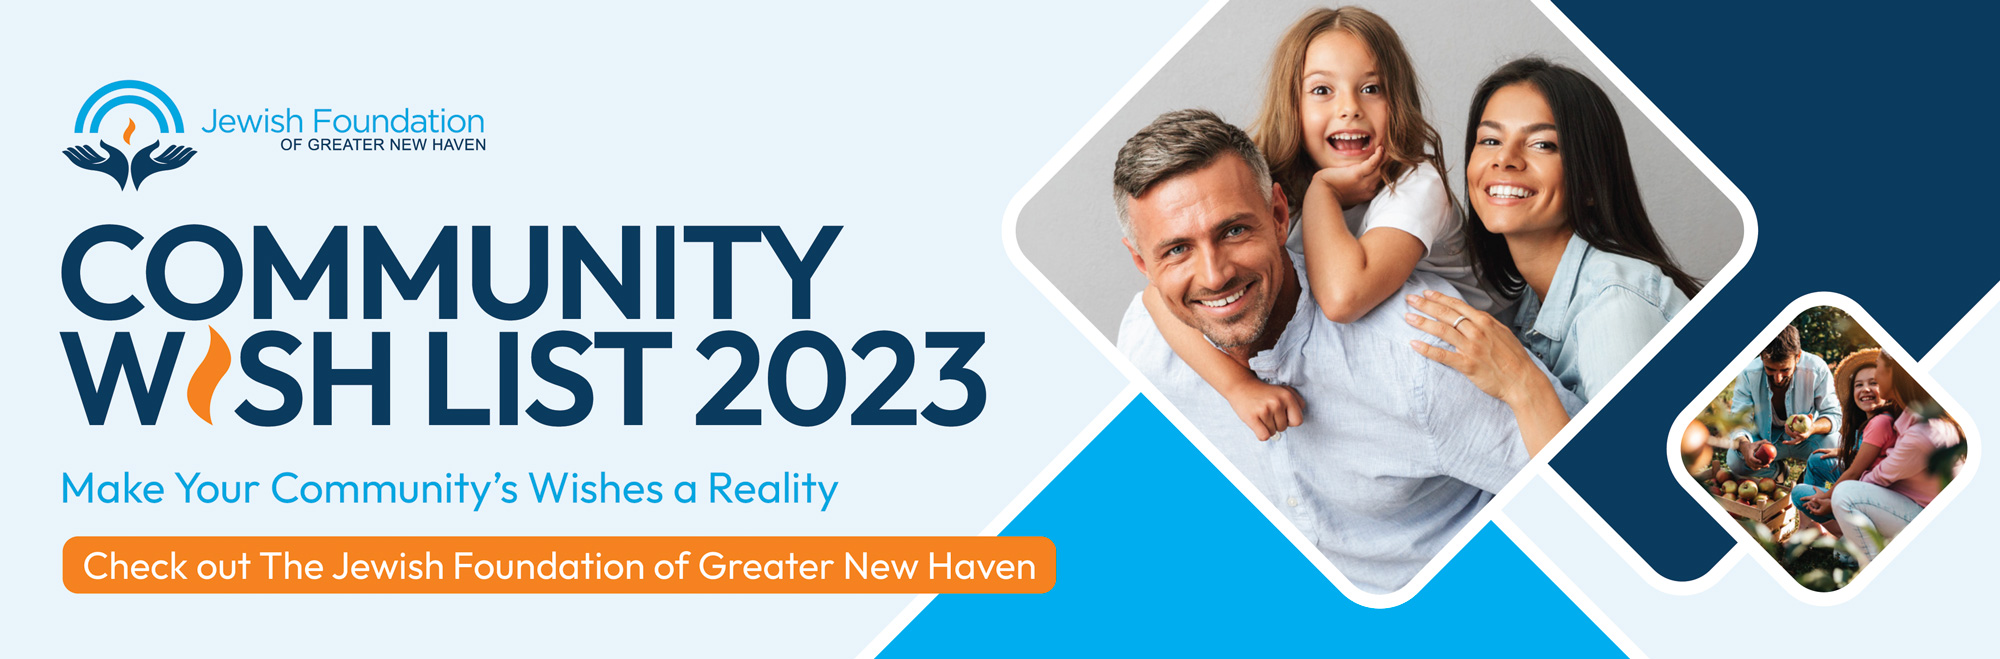 Community Wishlist 2023: Make Your Community's Wishes a Reality